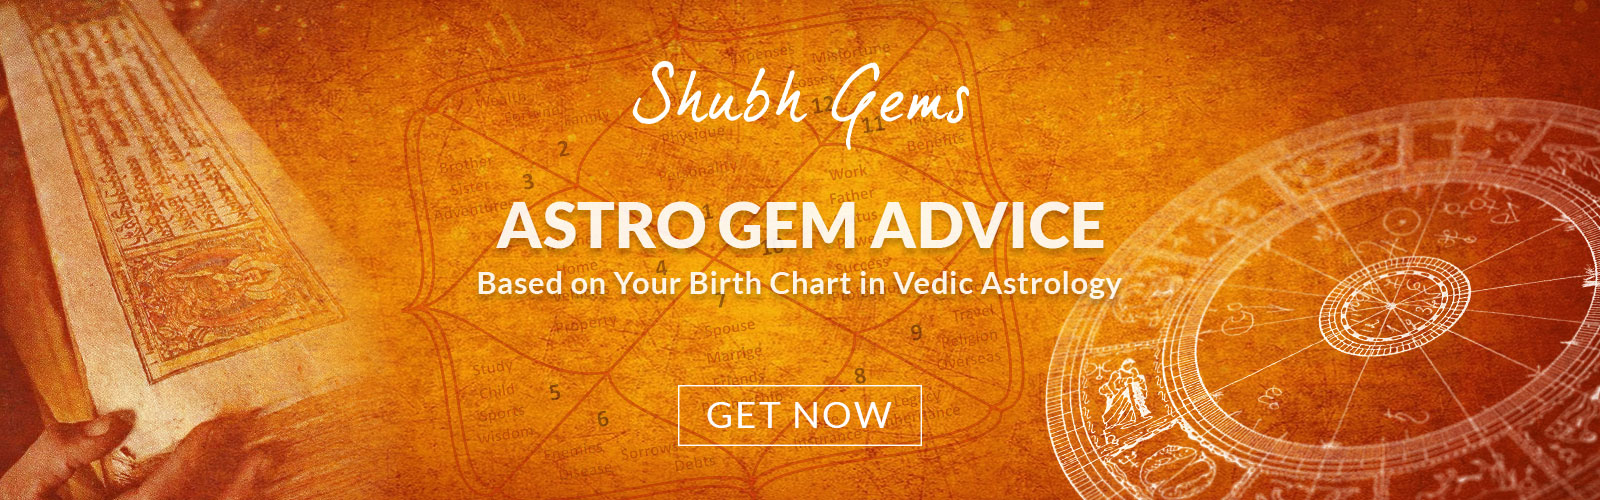 Astro Gem Advice